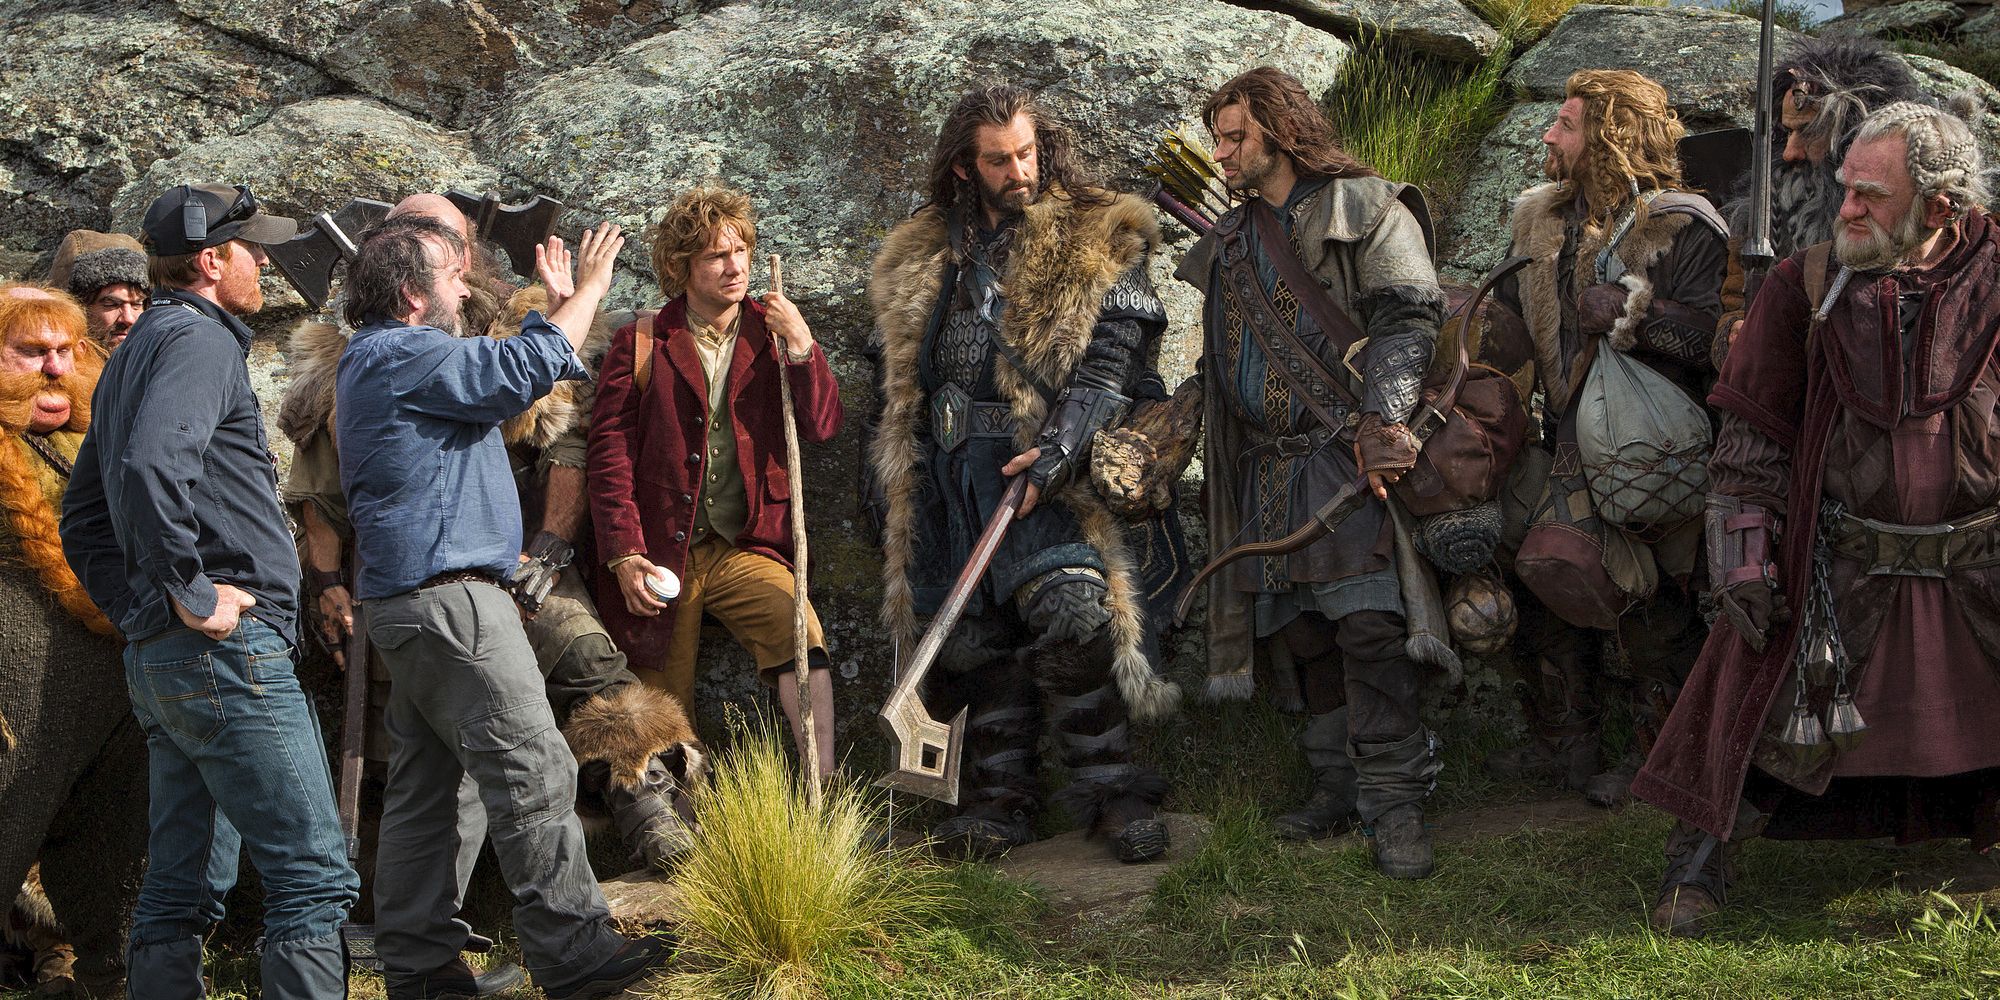 The Hobbit Cast and Crew 